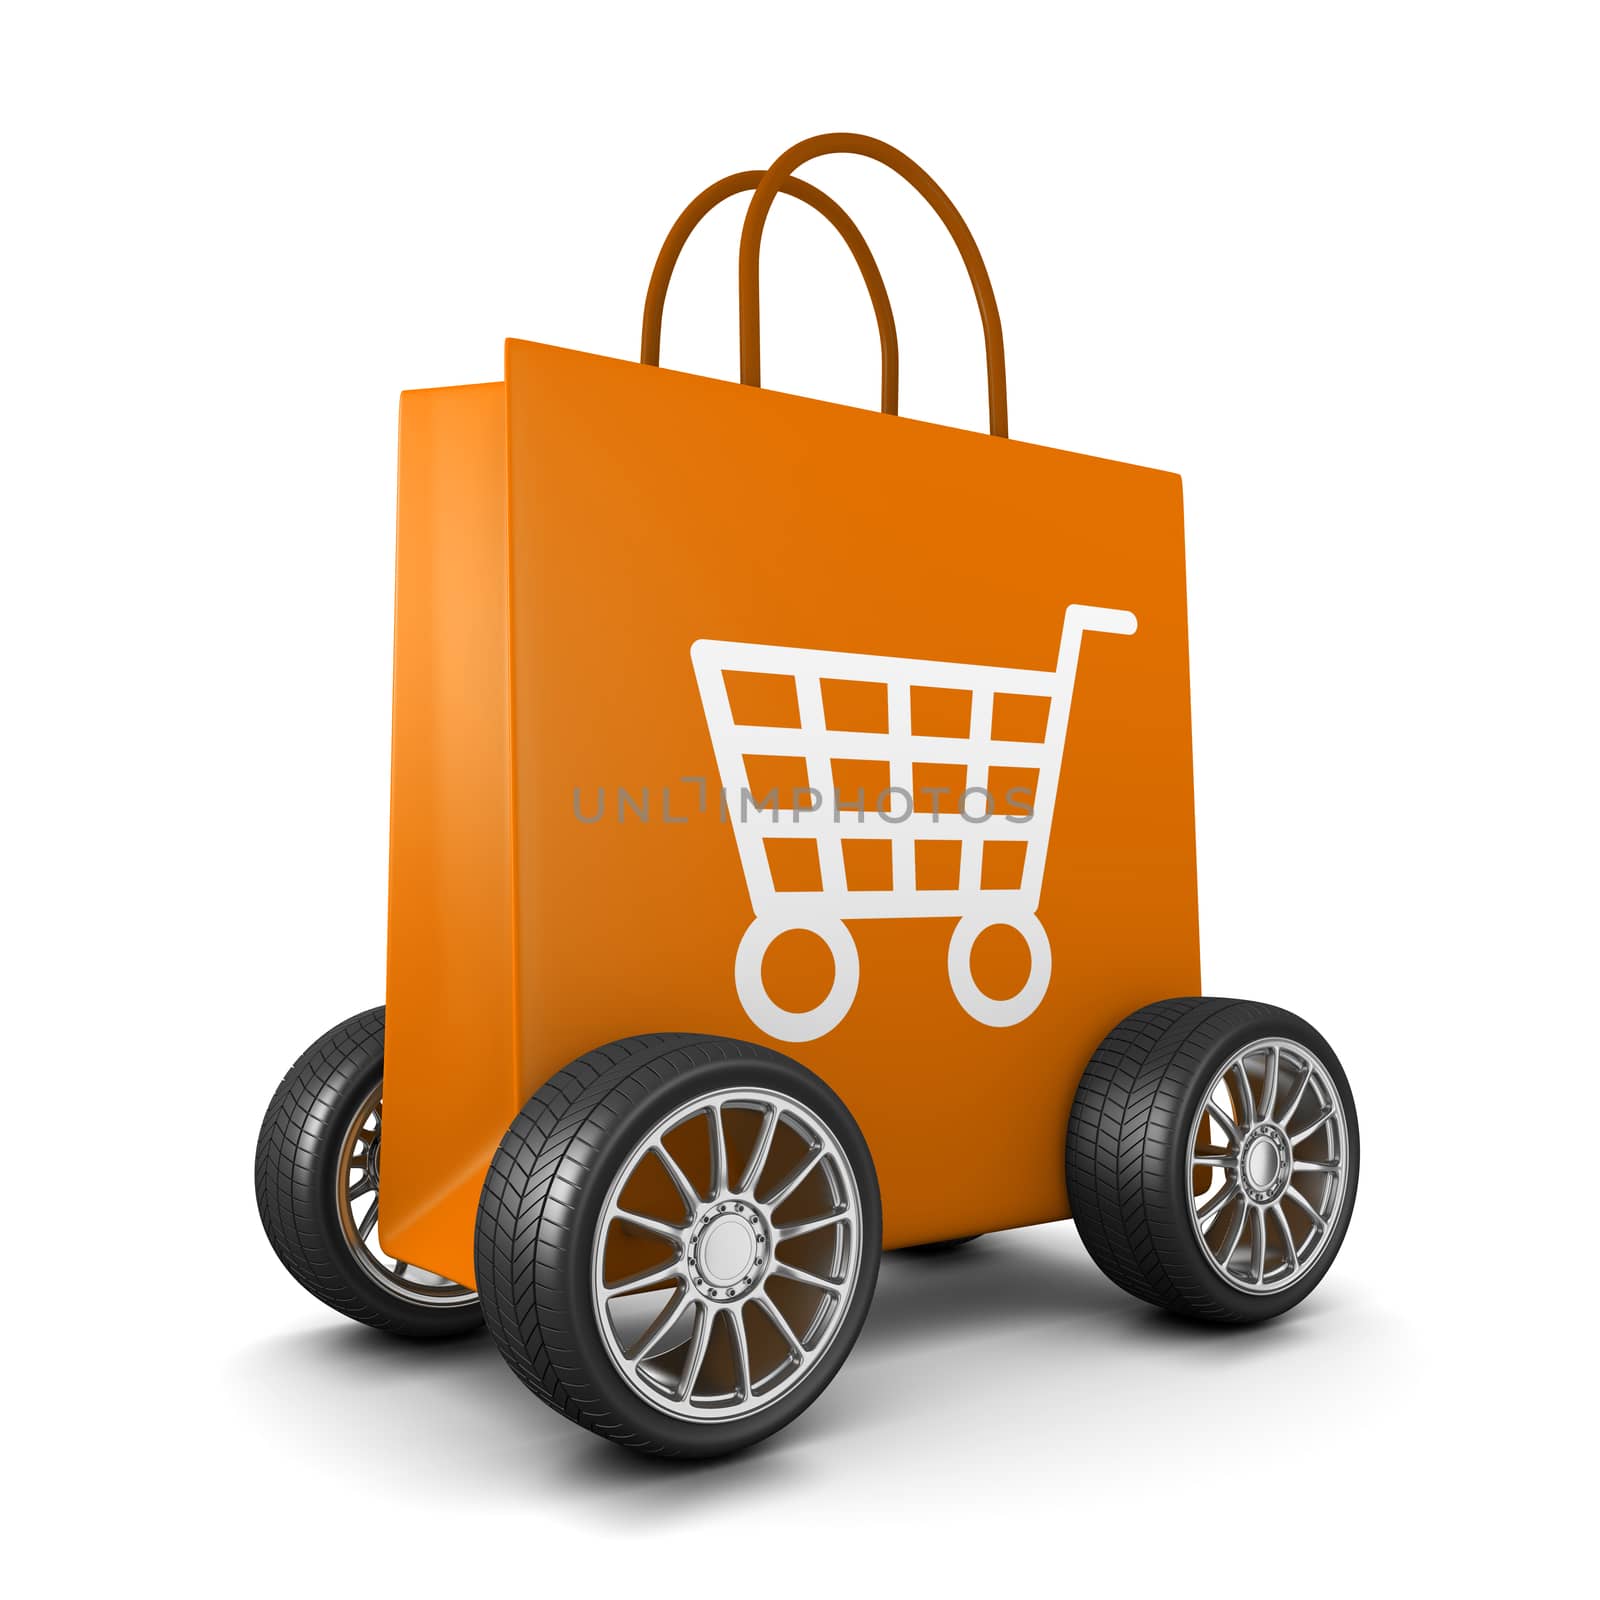 Orange Shopping Bag with Cart Symbol and Wheels on White Background 3D Illustration